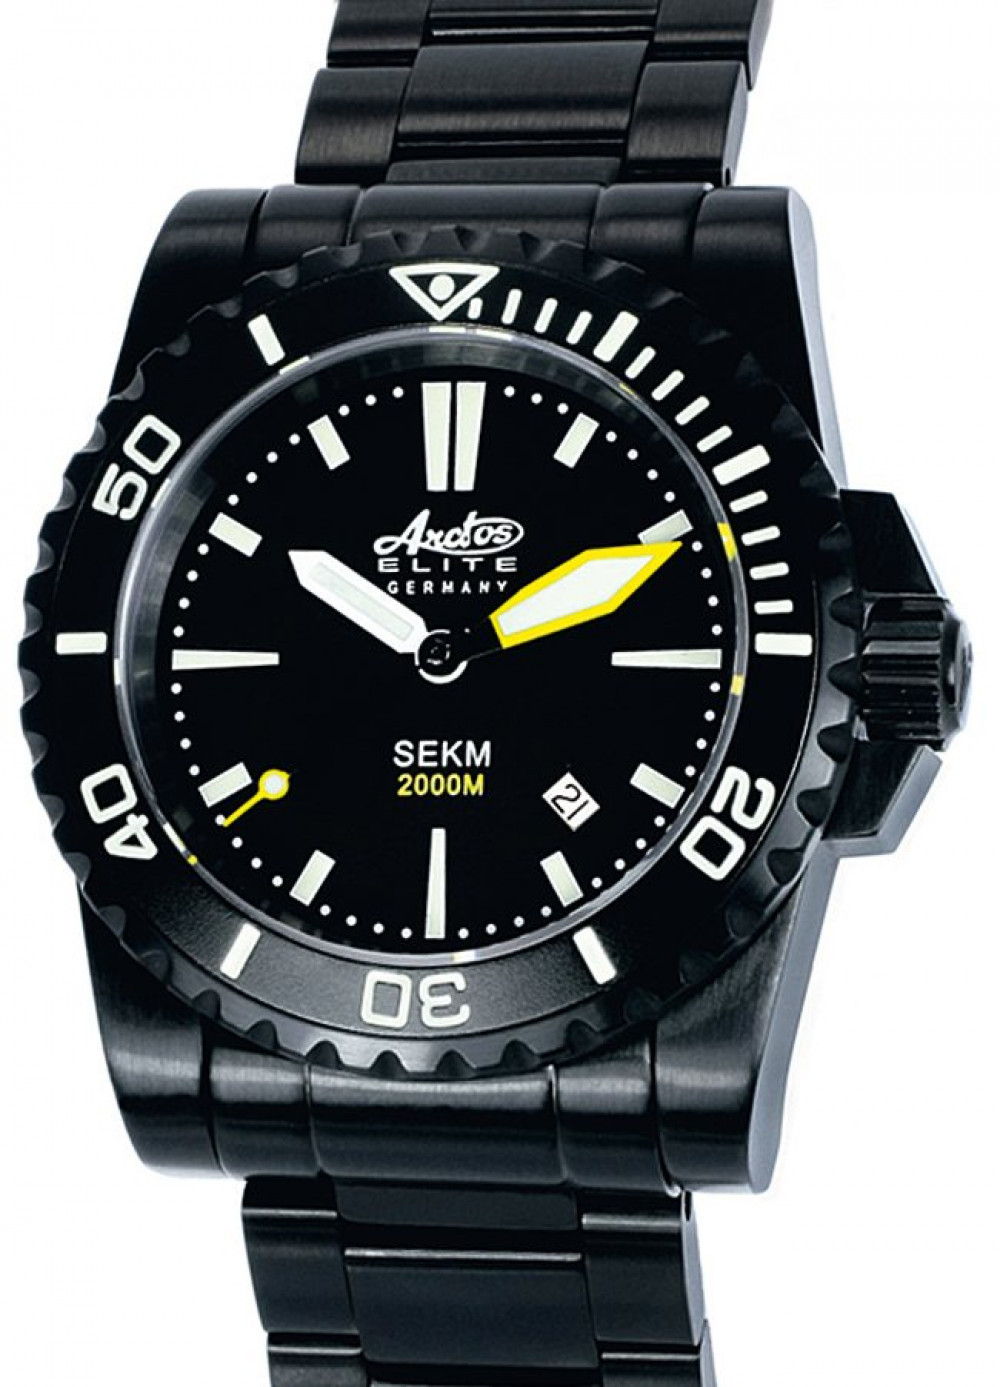 Zegarek firmy Arctos, model SEKM Black Wave